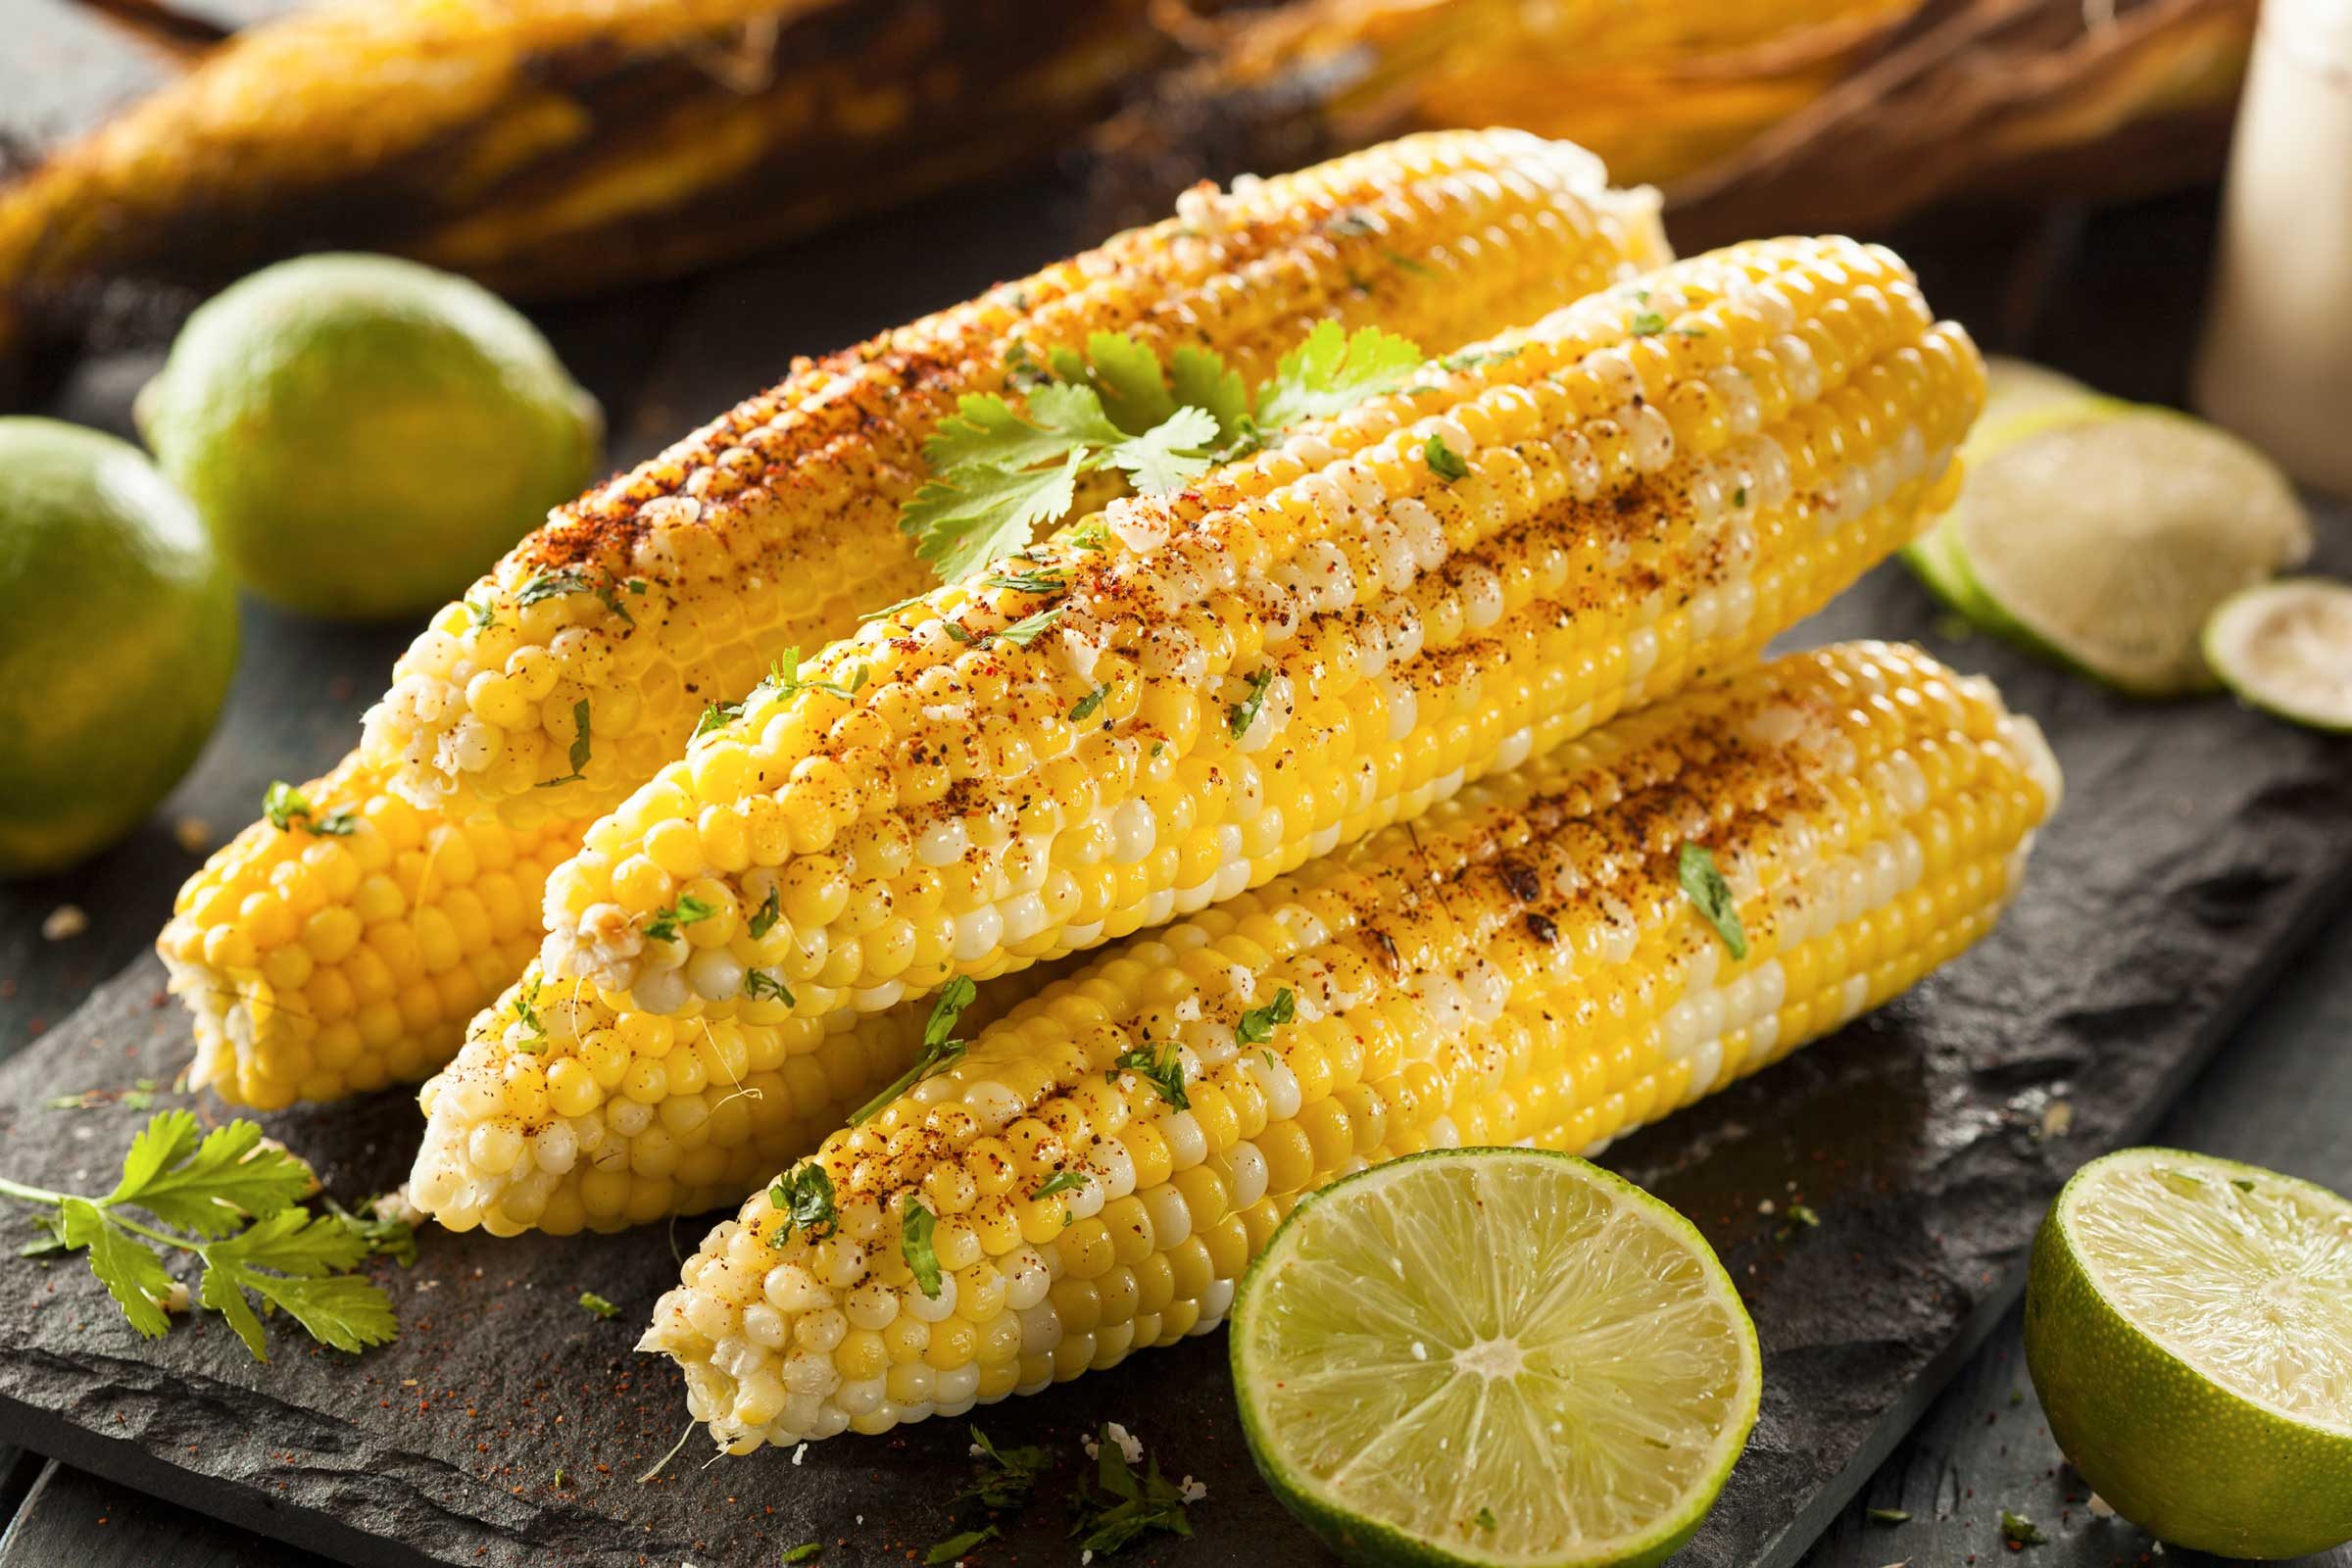 Nibble on corn